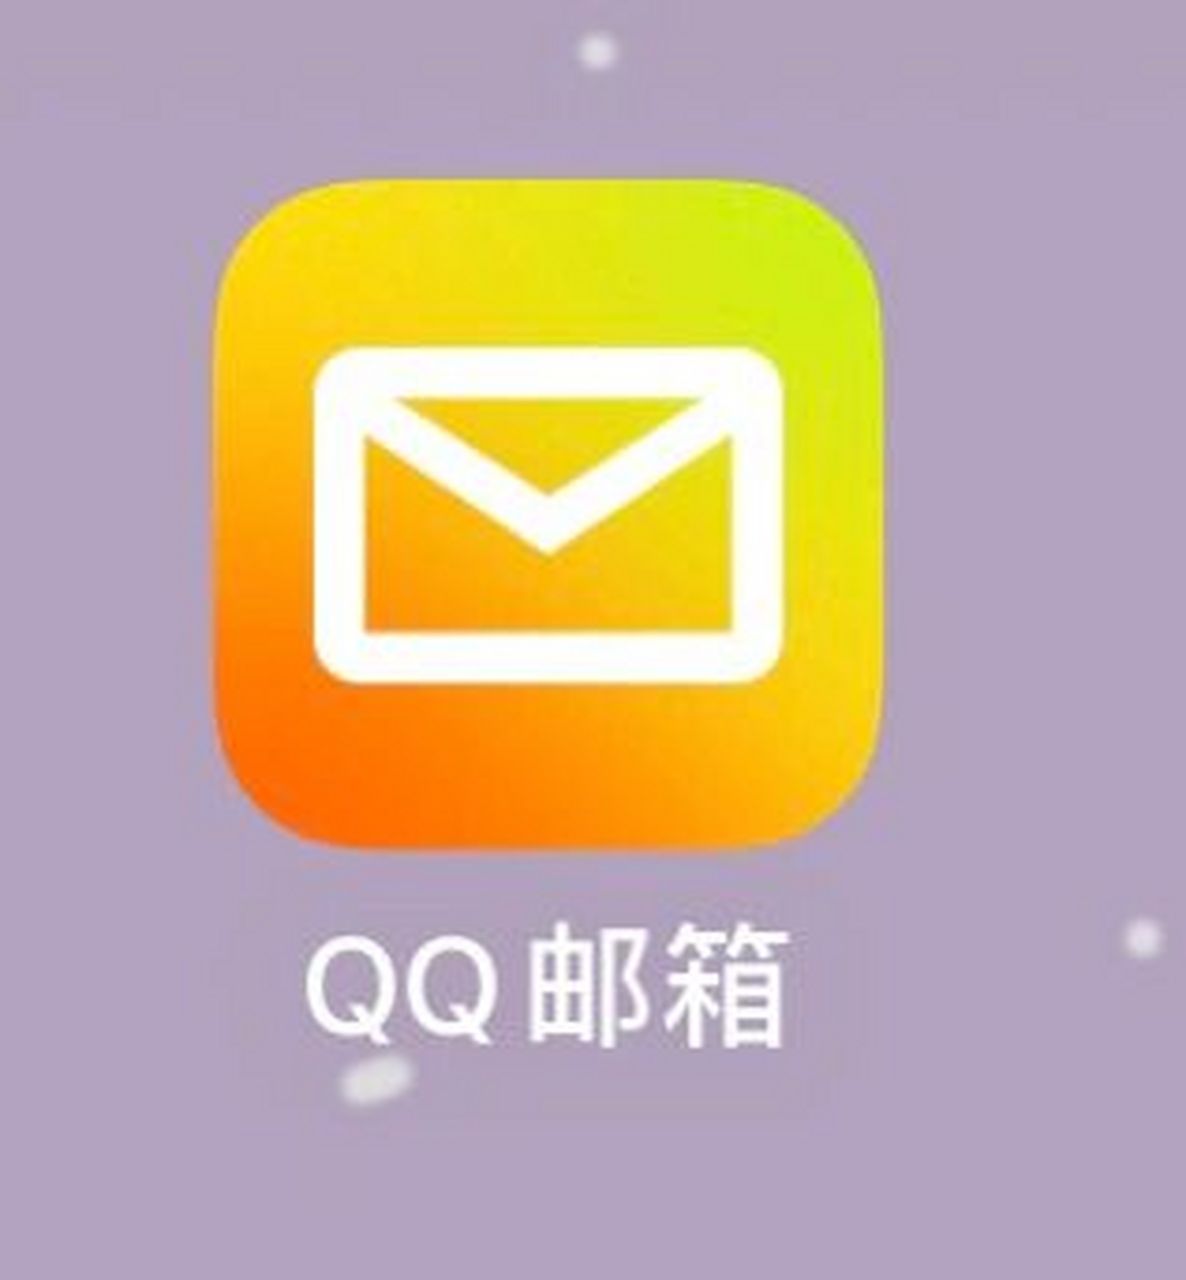 qq邮箱logo图片